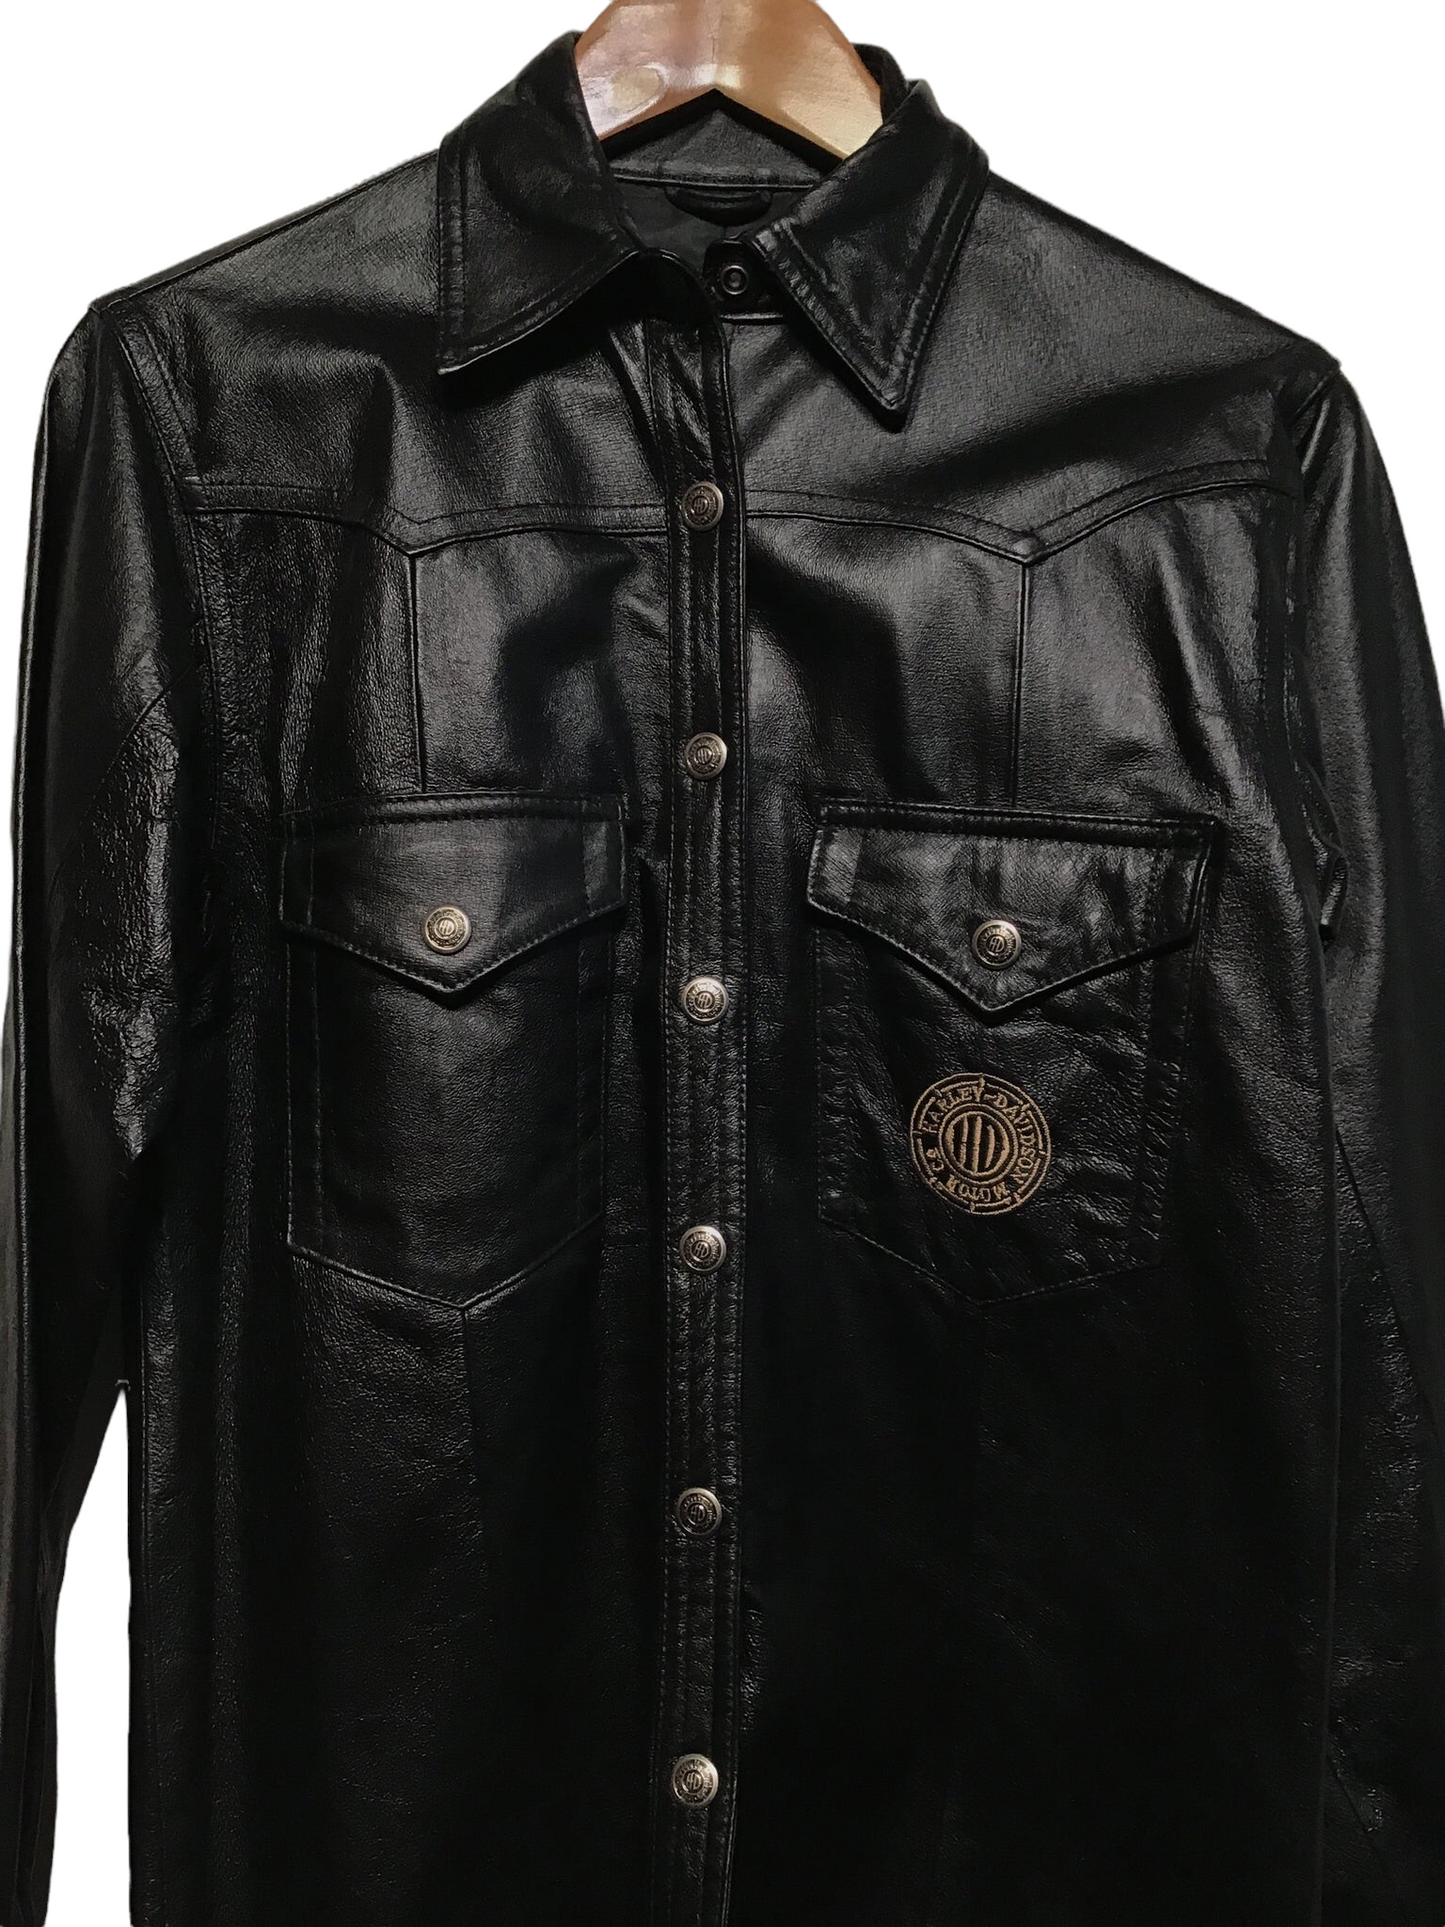 Harley Davidson Leather Shirt Jacket (Women’s Size S)